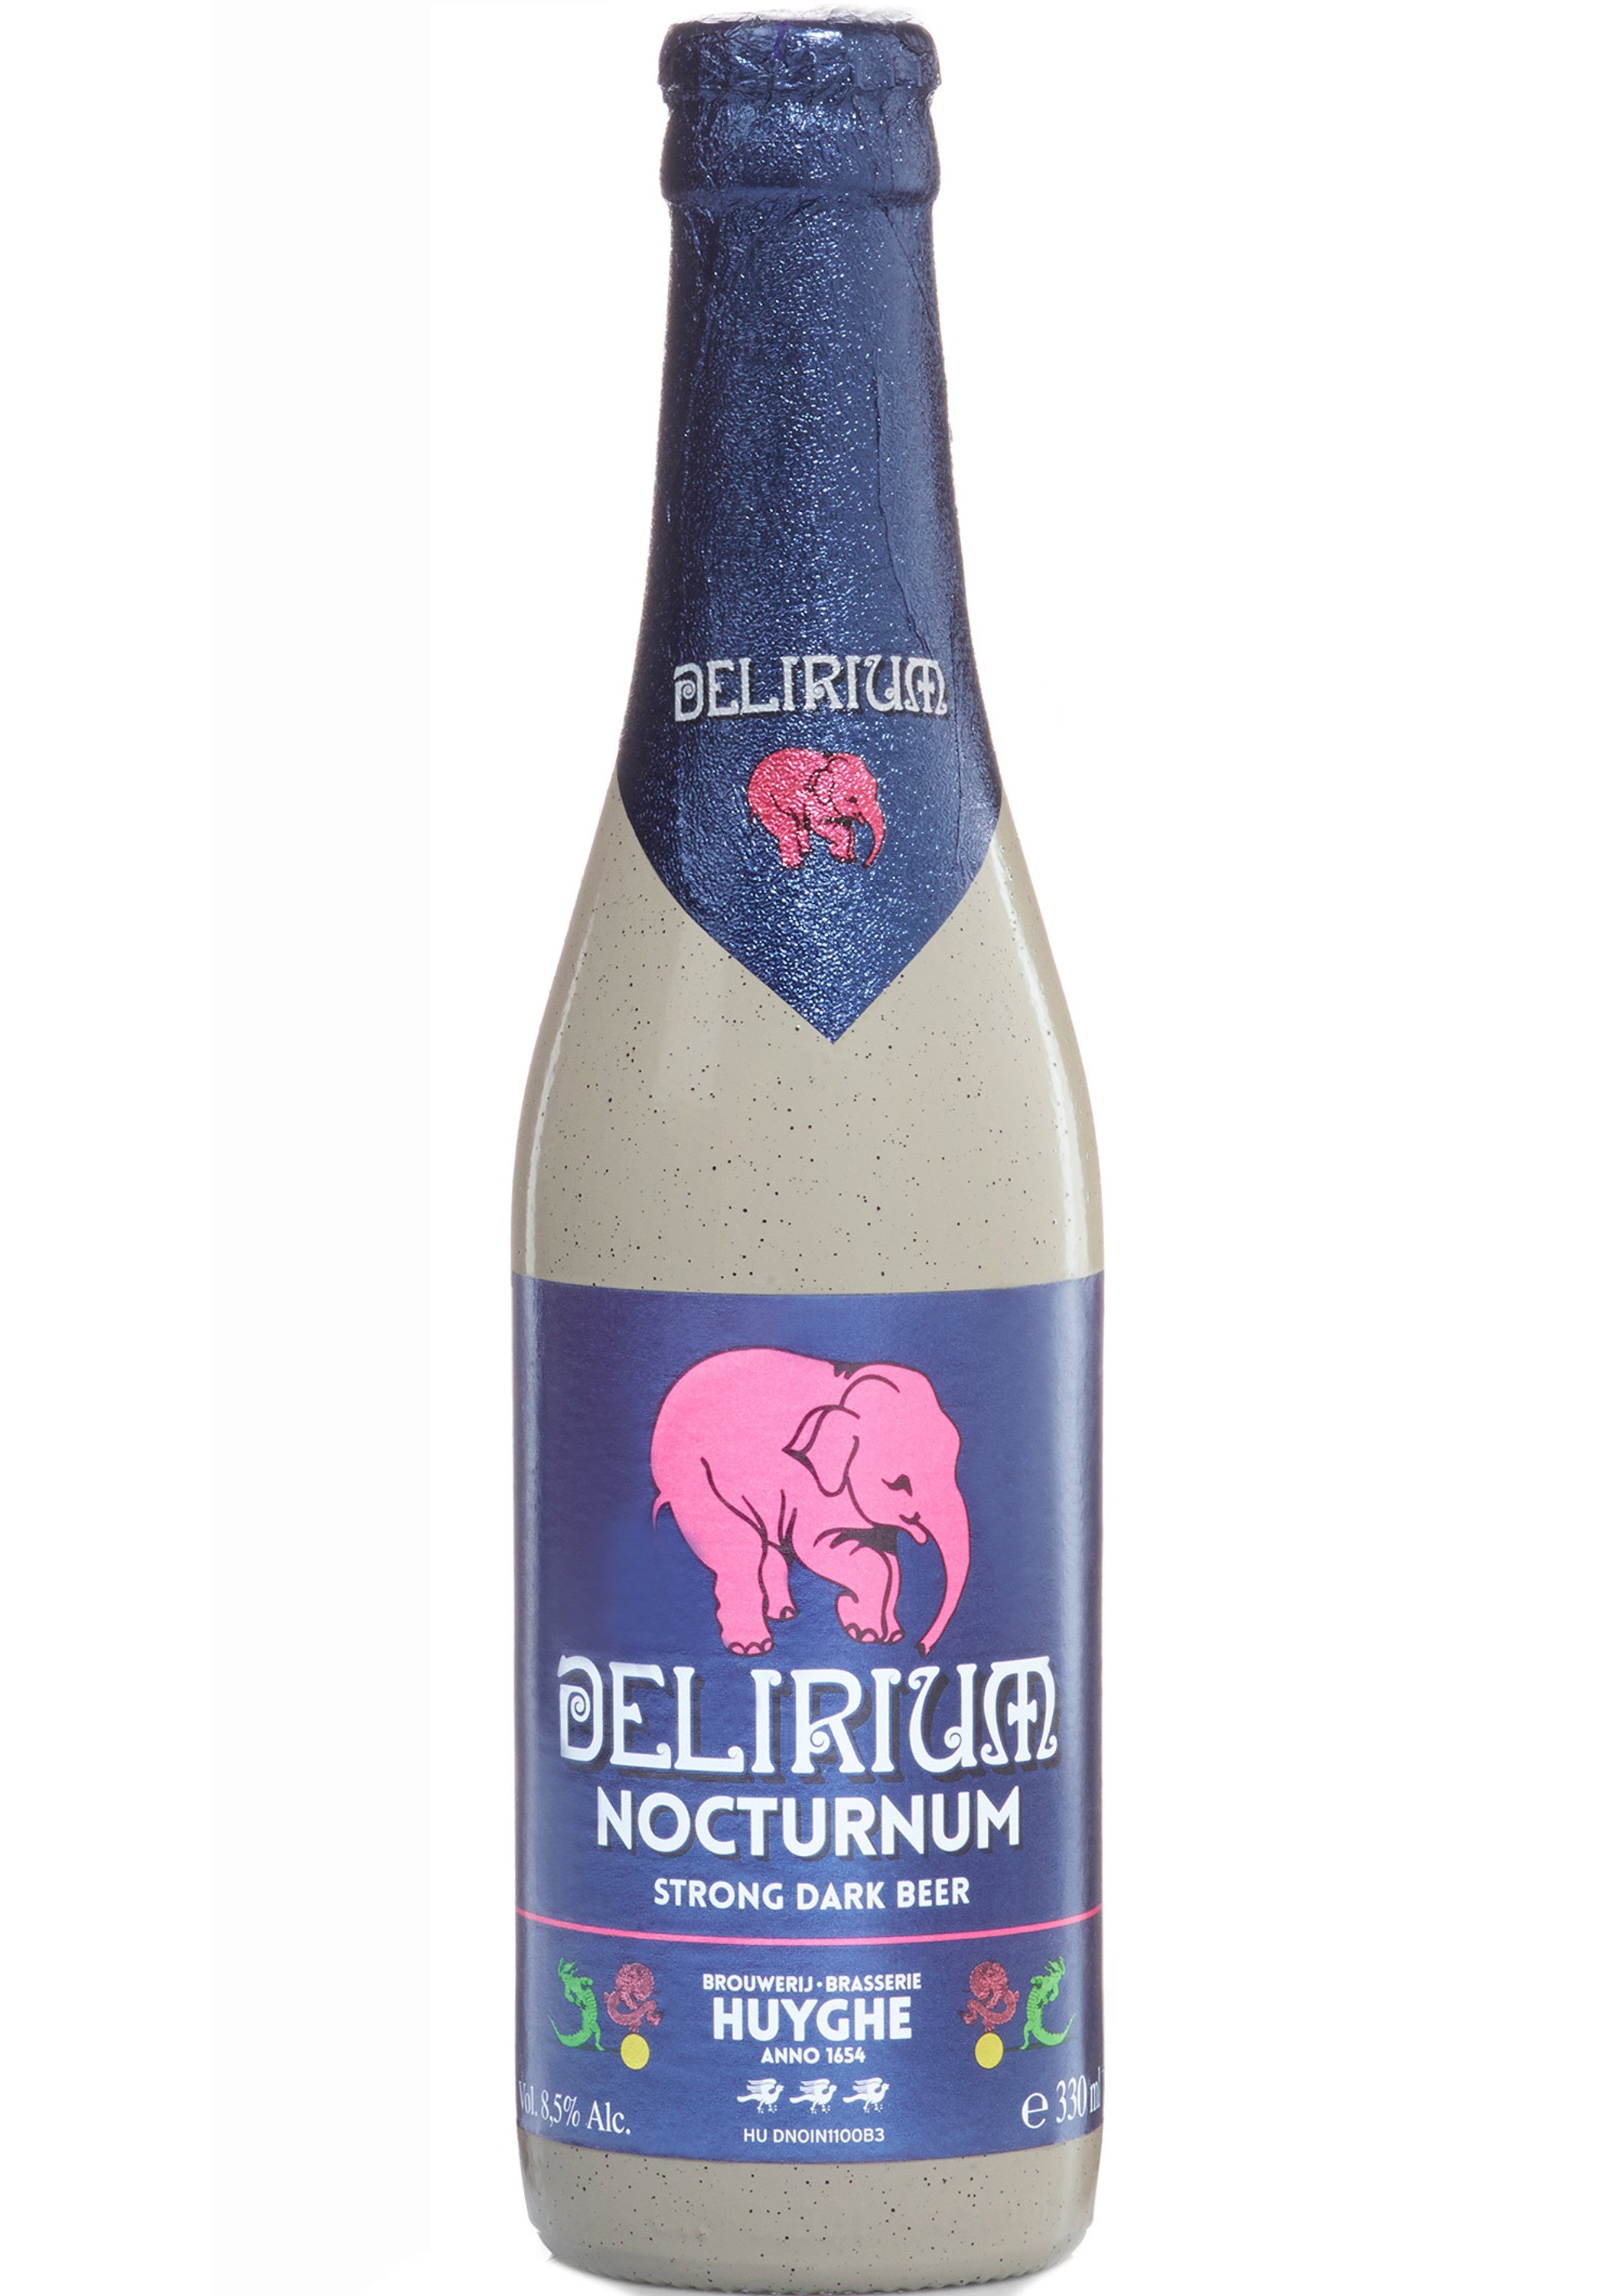 Delirium Nocturnum 0,33l - Starkbier aus Belgien mit 8,5% Vol.